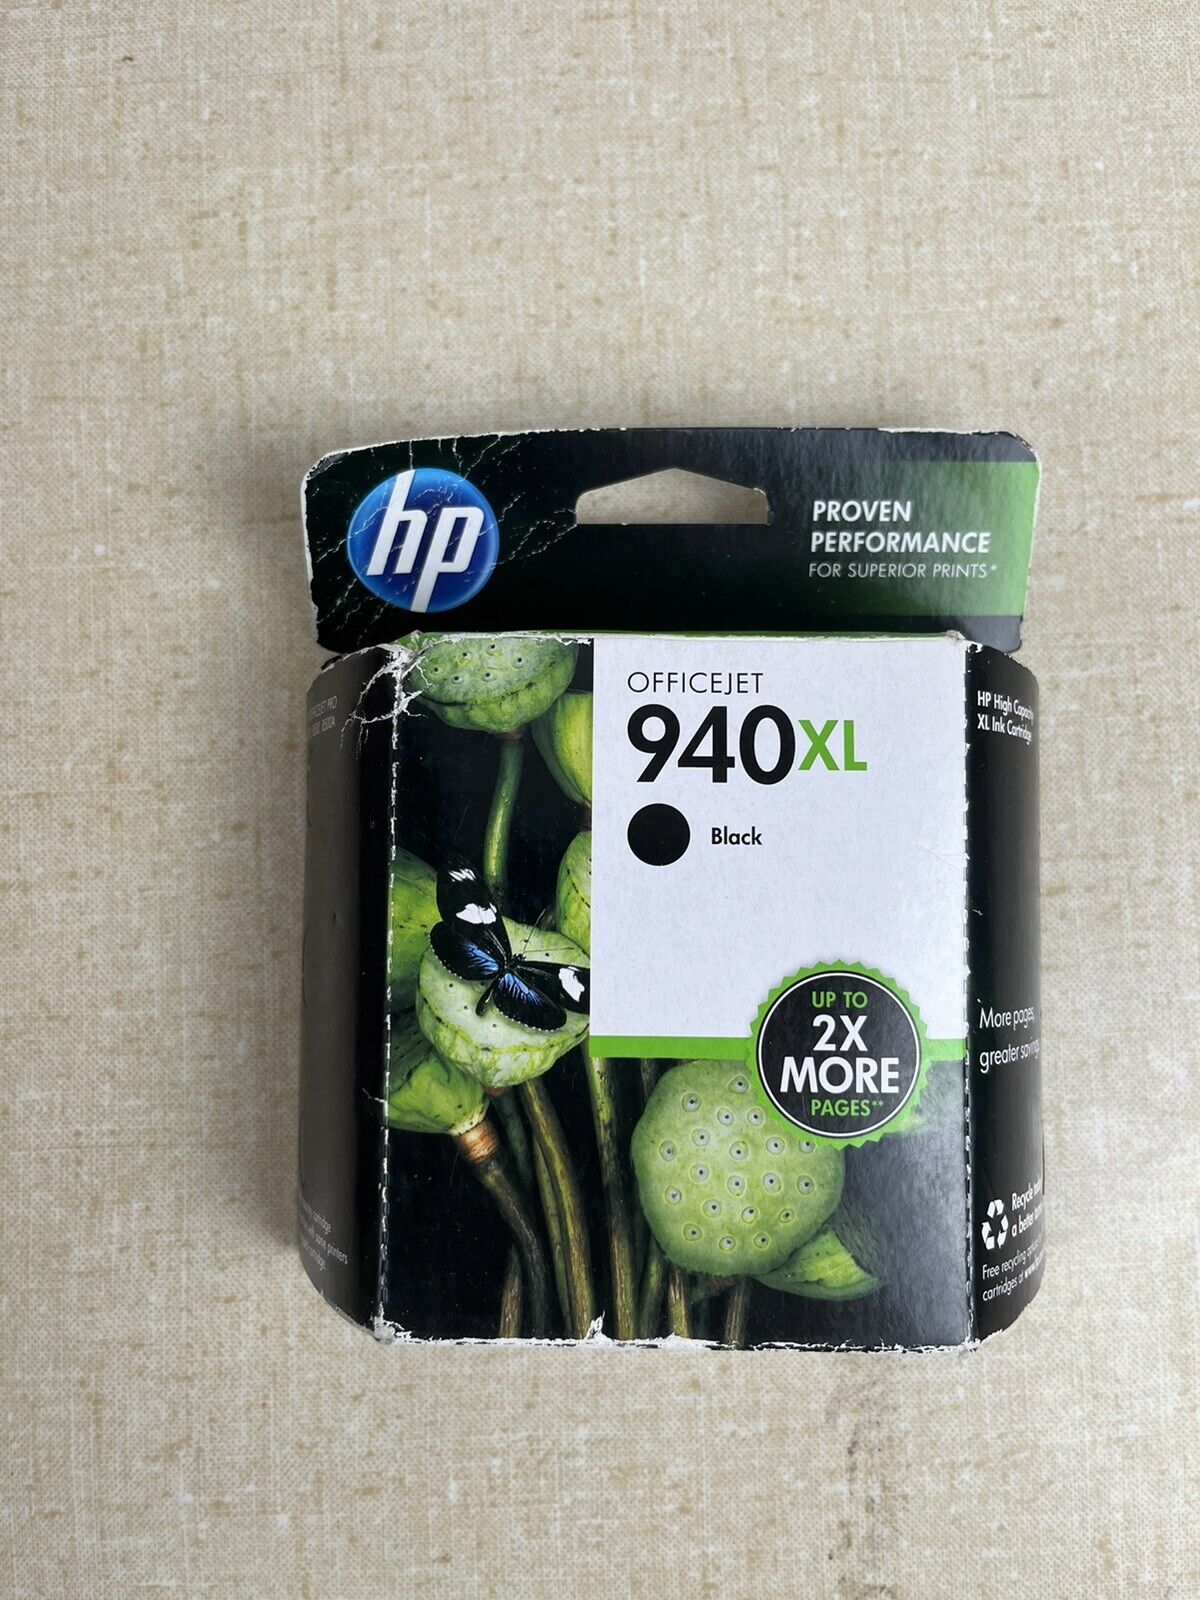 HP OfficeJet 940XL Black Official Genuine HP Black Ink Cartridge 05/14 NEW